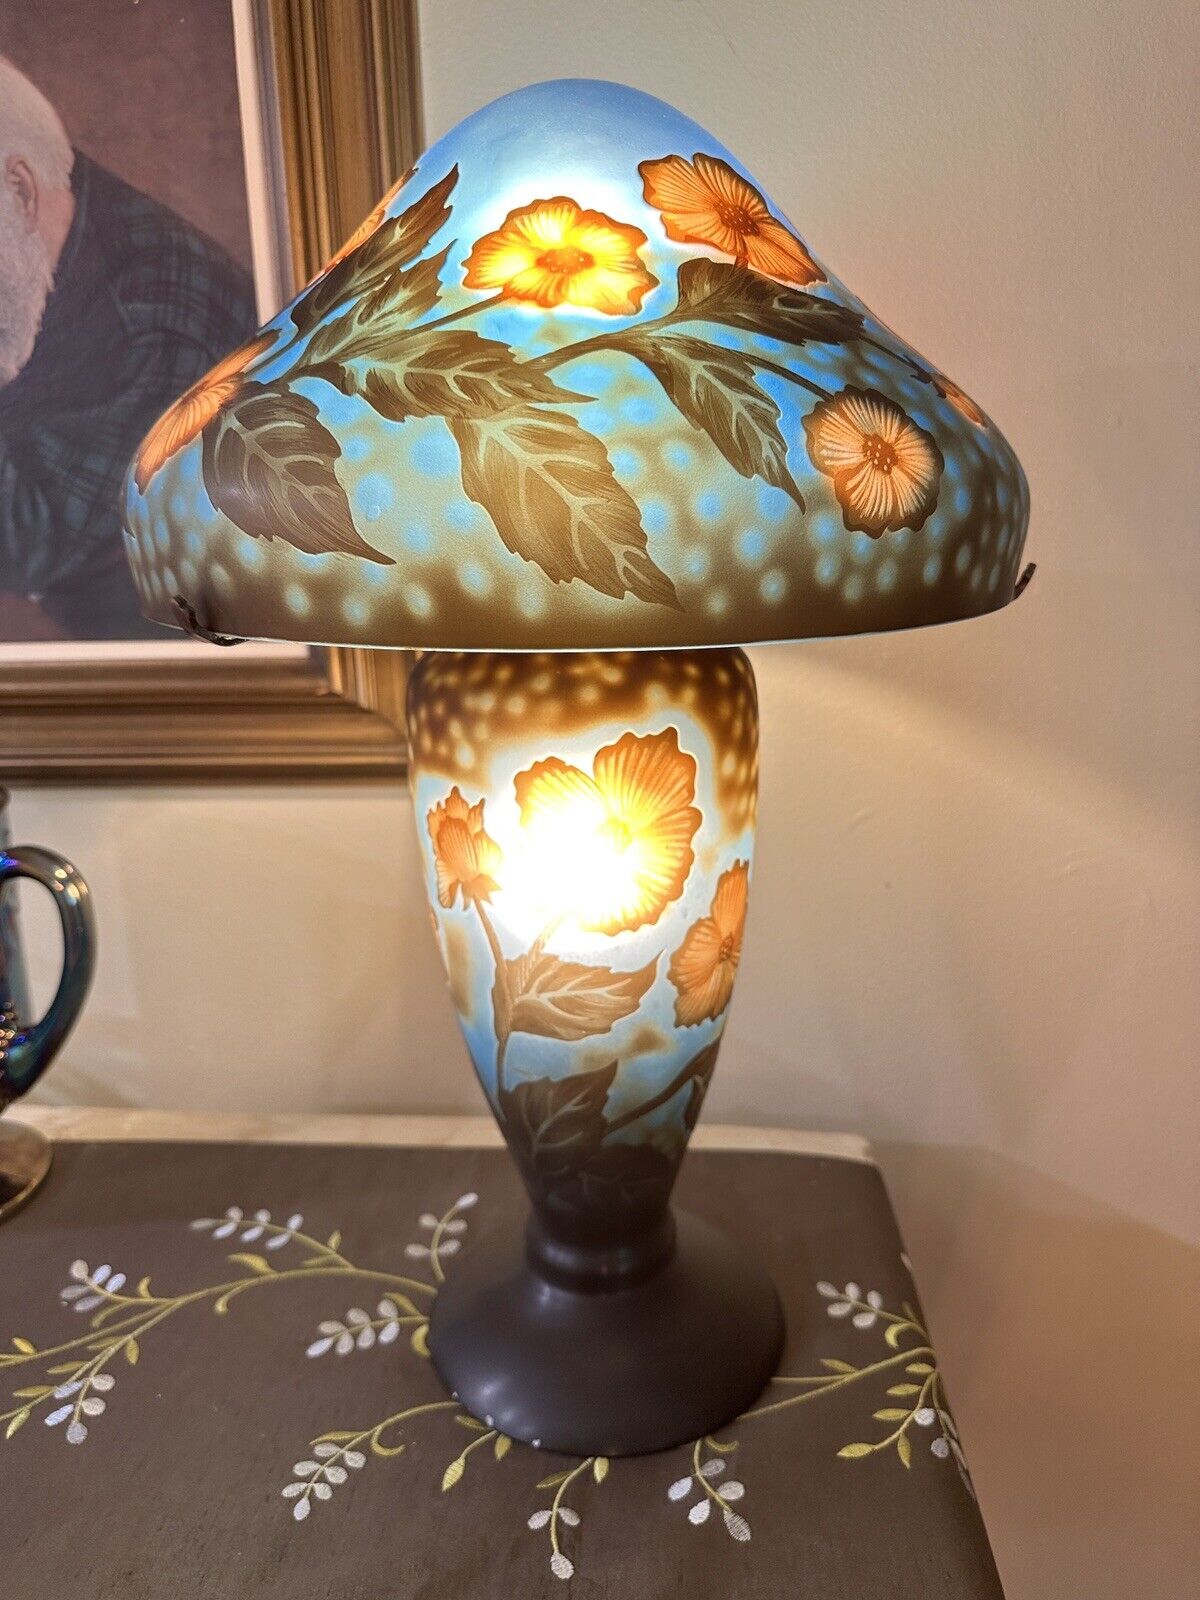 Vintage Emile Galle Style Glass Mushroom Lamp Art Nouveau Blue Orange Flowers